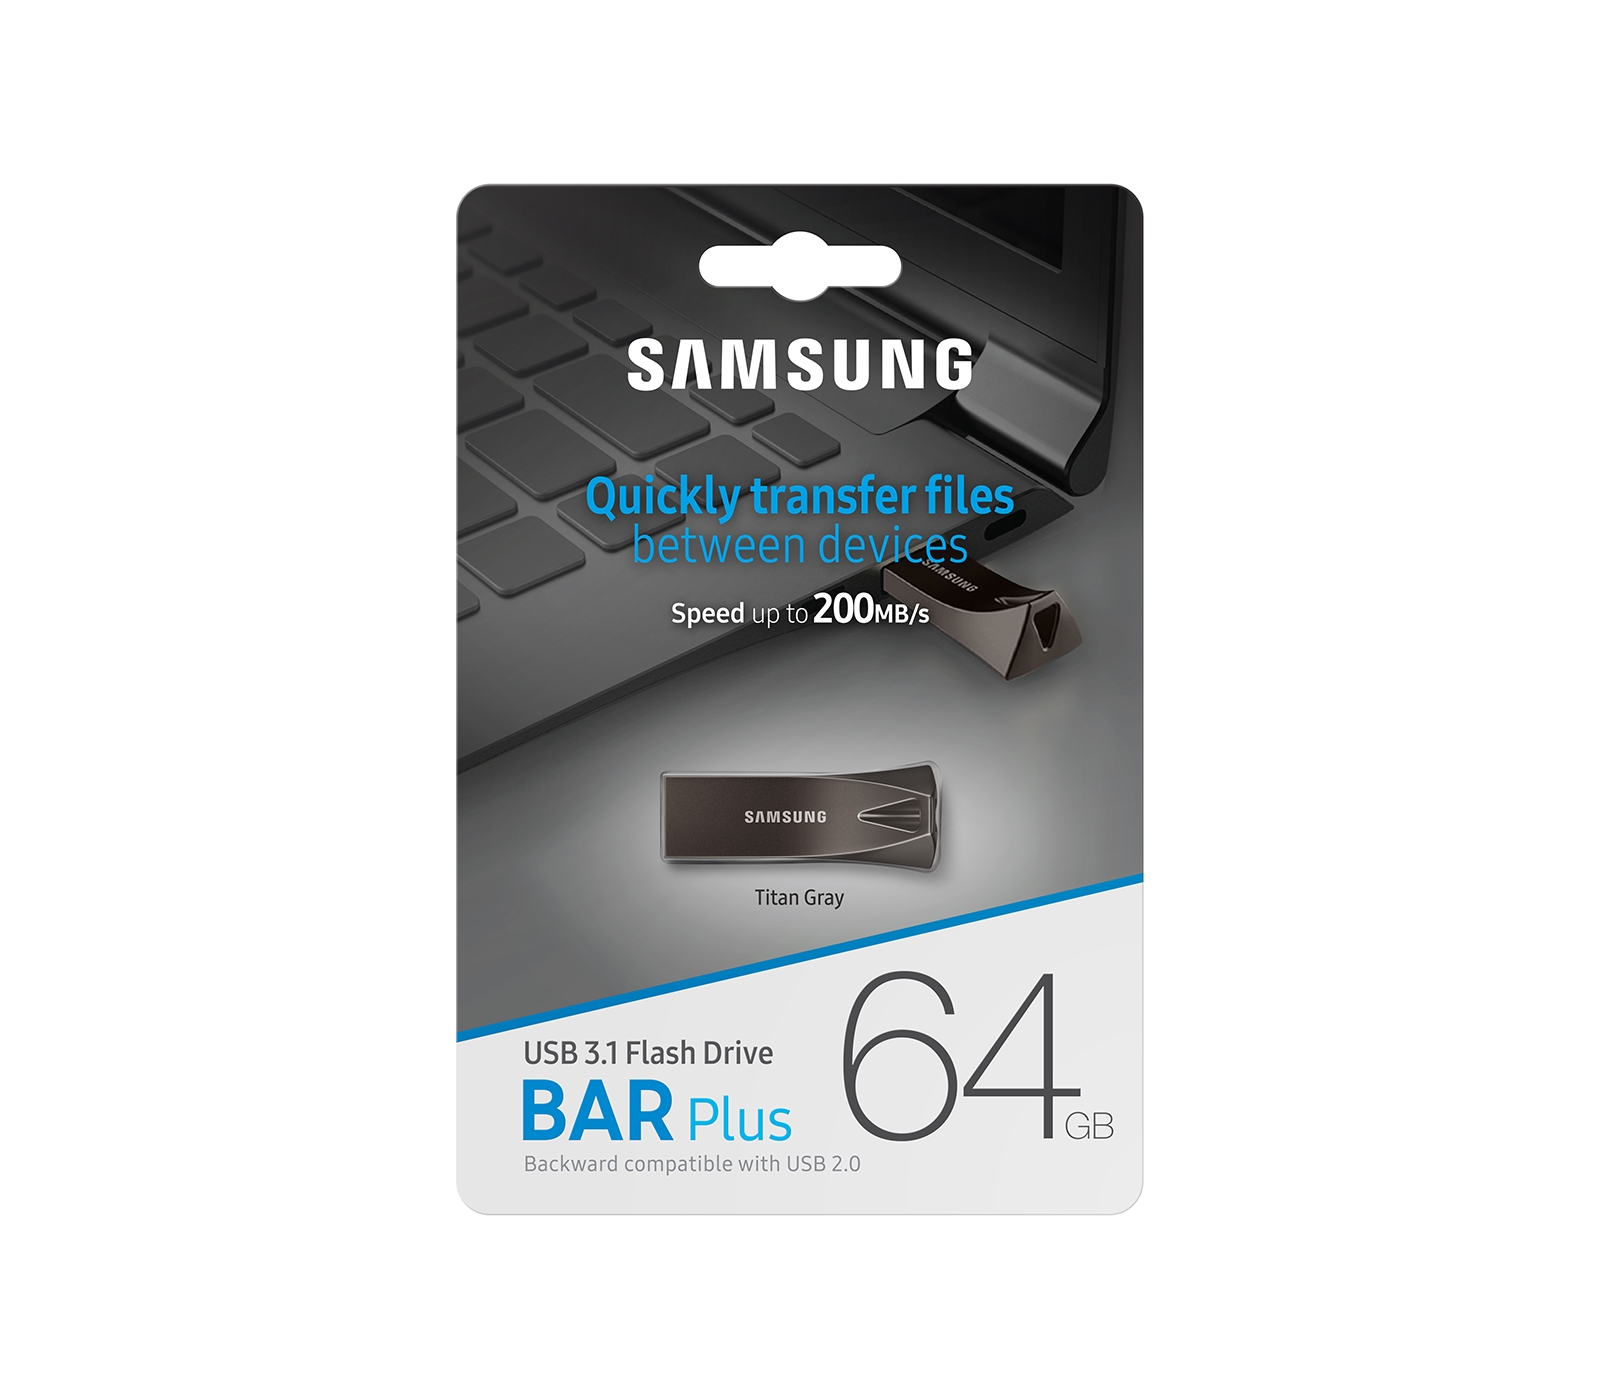 USB 3.1 Flash Drive BAR Plus 64GB Gray Memory & Storage - MUF-64BE4/AM | Samsung US